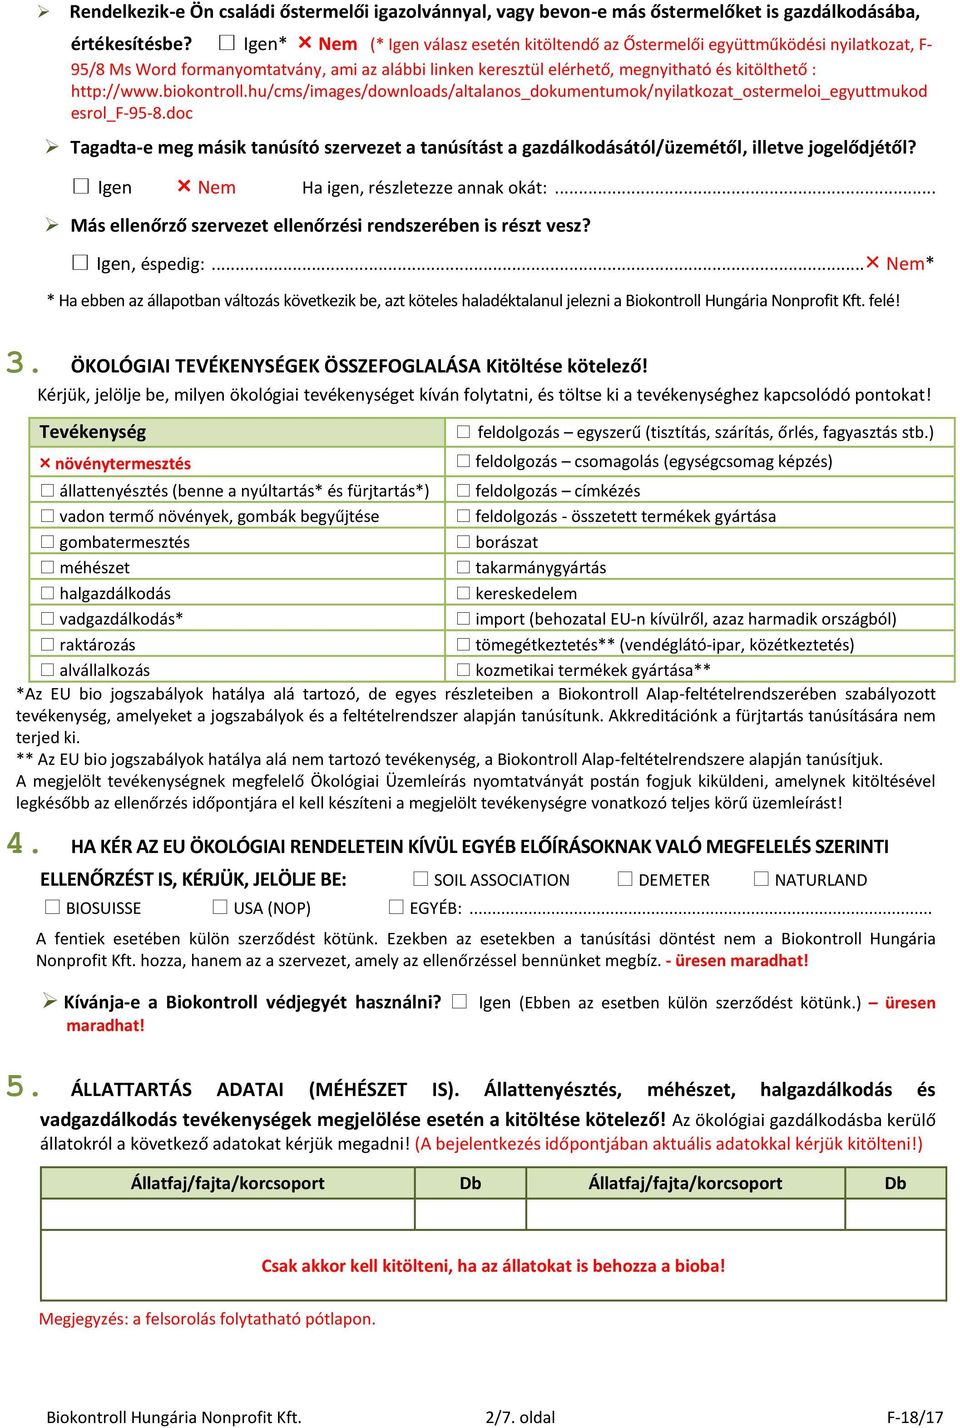 biokontroll.hu/cms/images/downloads/altalanos_dokumentumok/nyilatkozat_ostermeloi_egyuttmukod esrol_f-95-8.